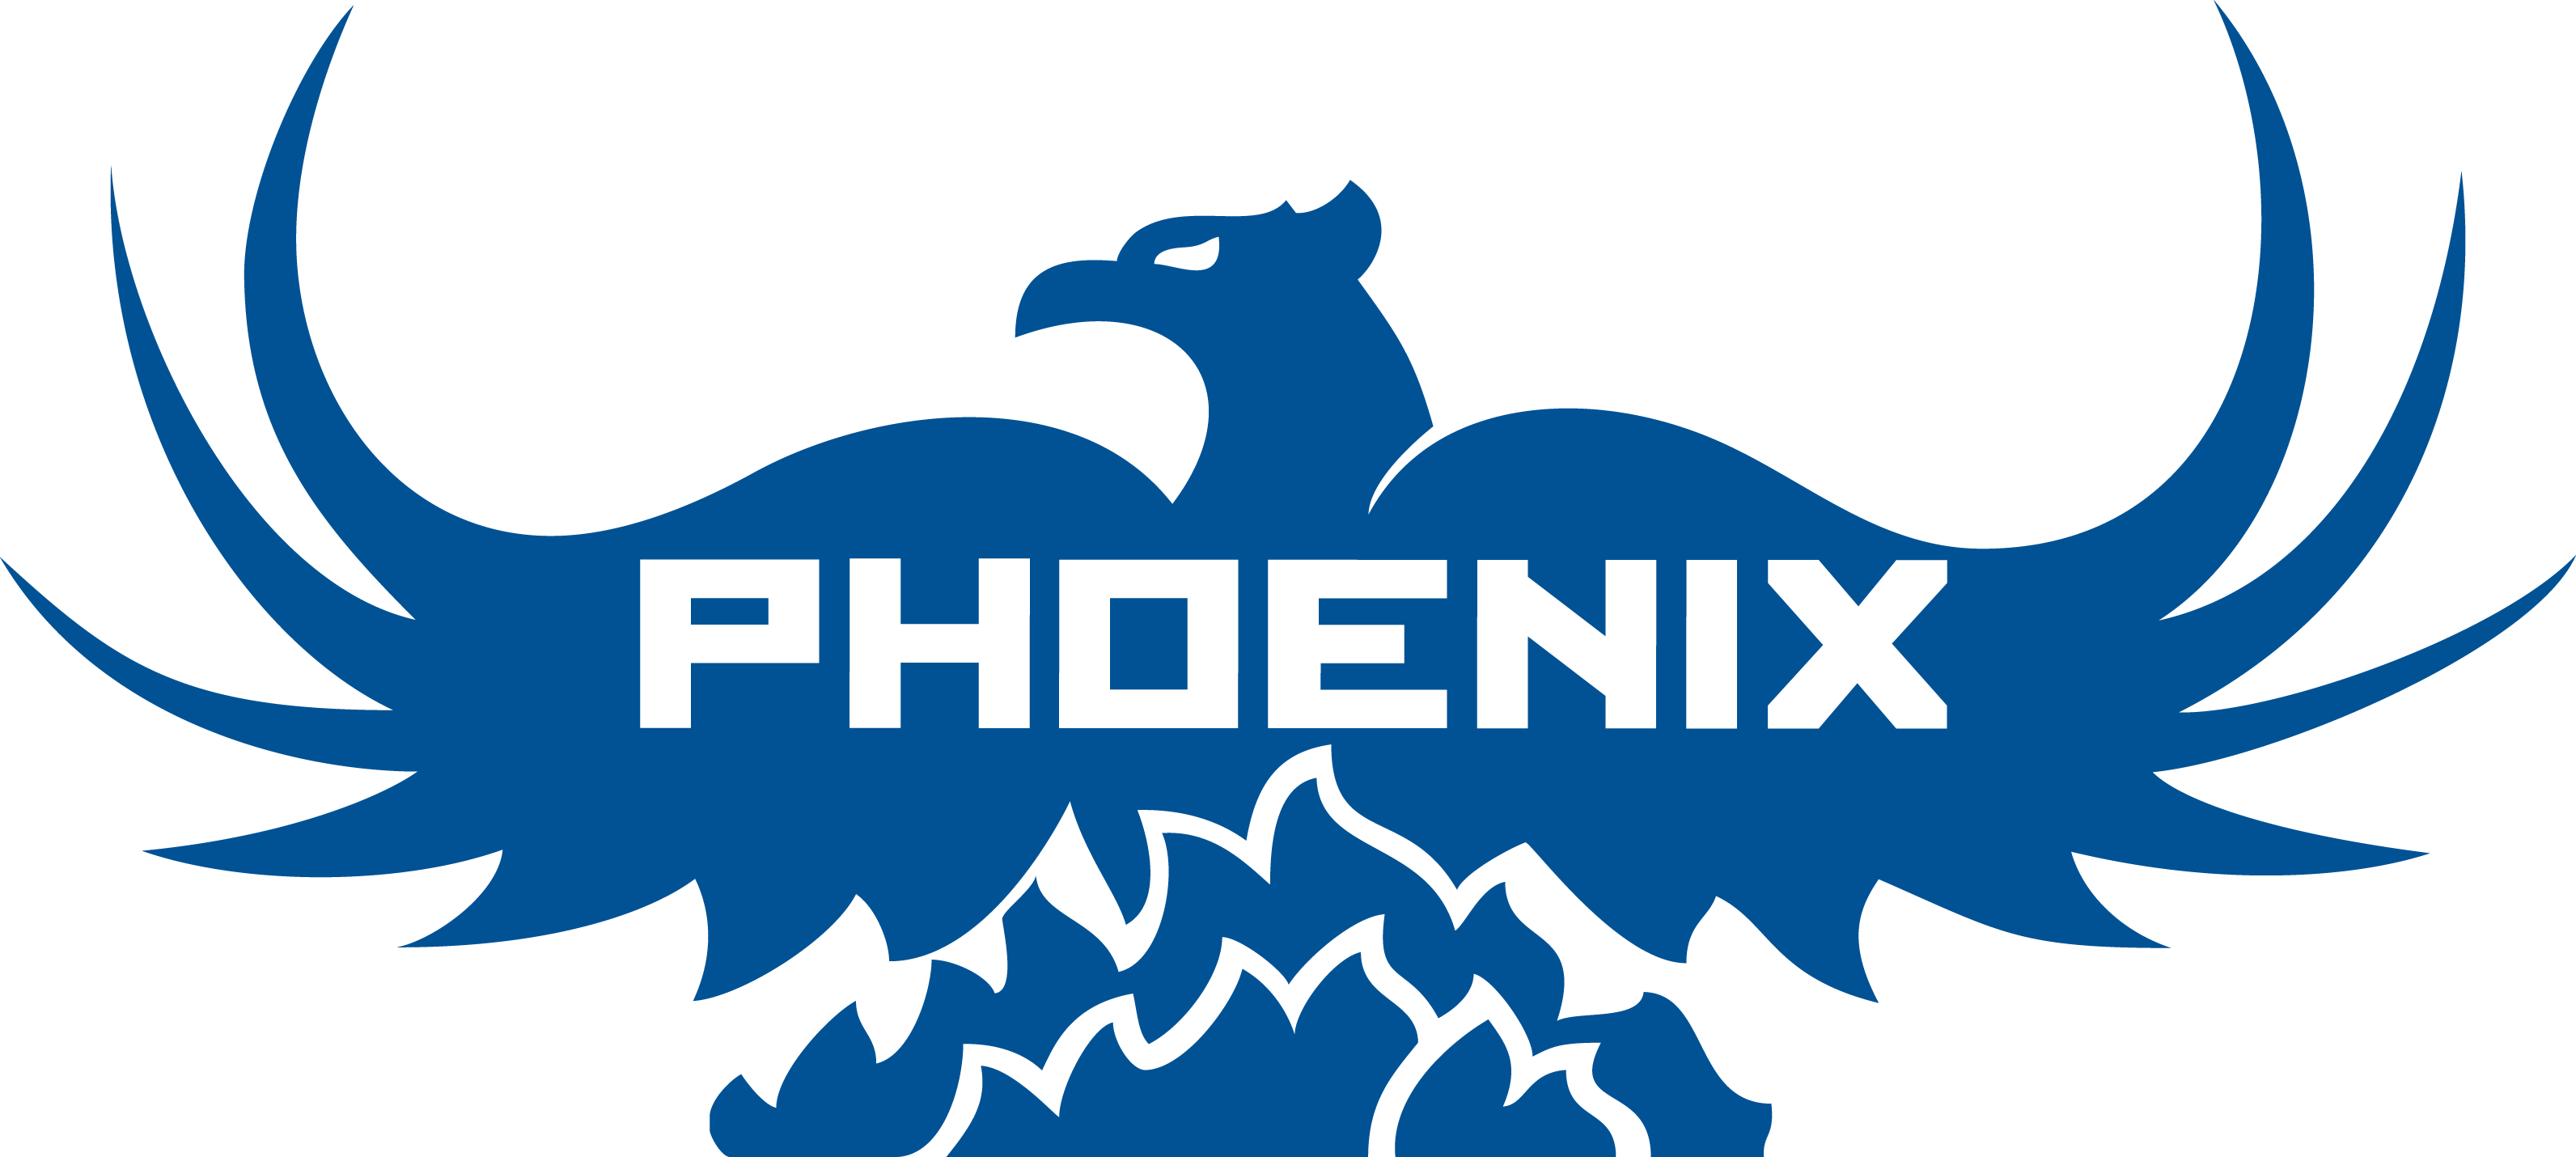 Phoenix service. Феникс лого. ООО Феникс логотип. Хк Phoenix логотип. Логотип Феникс PNG.